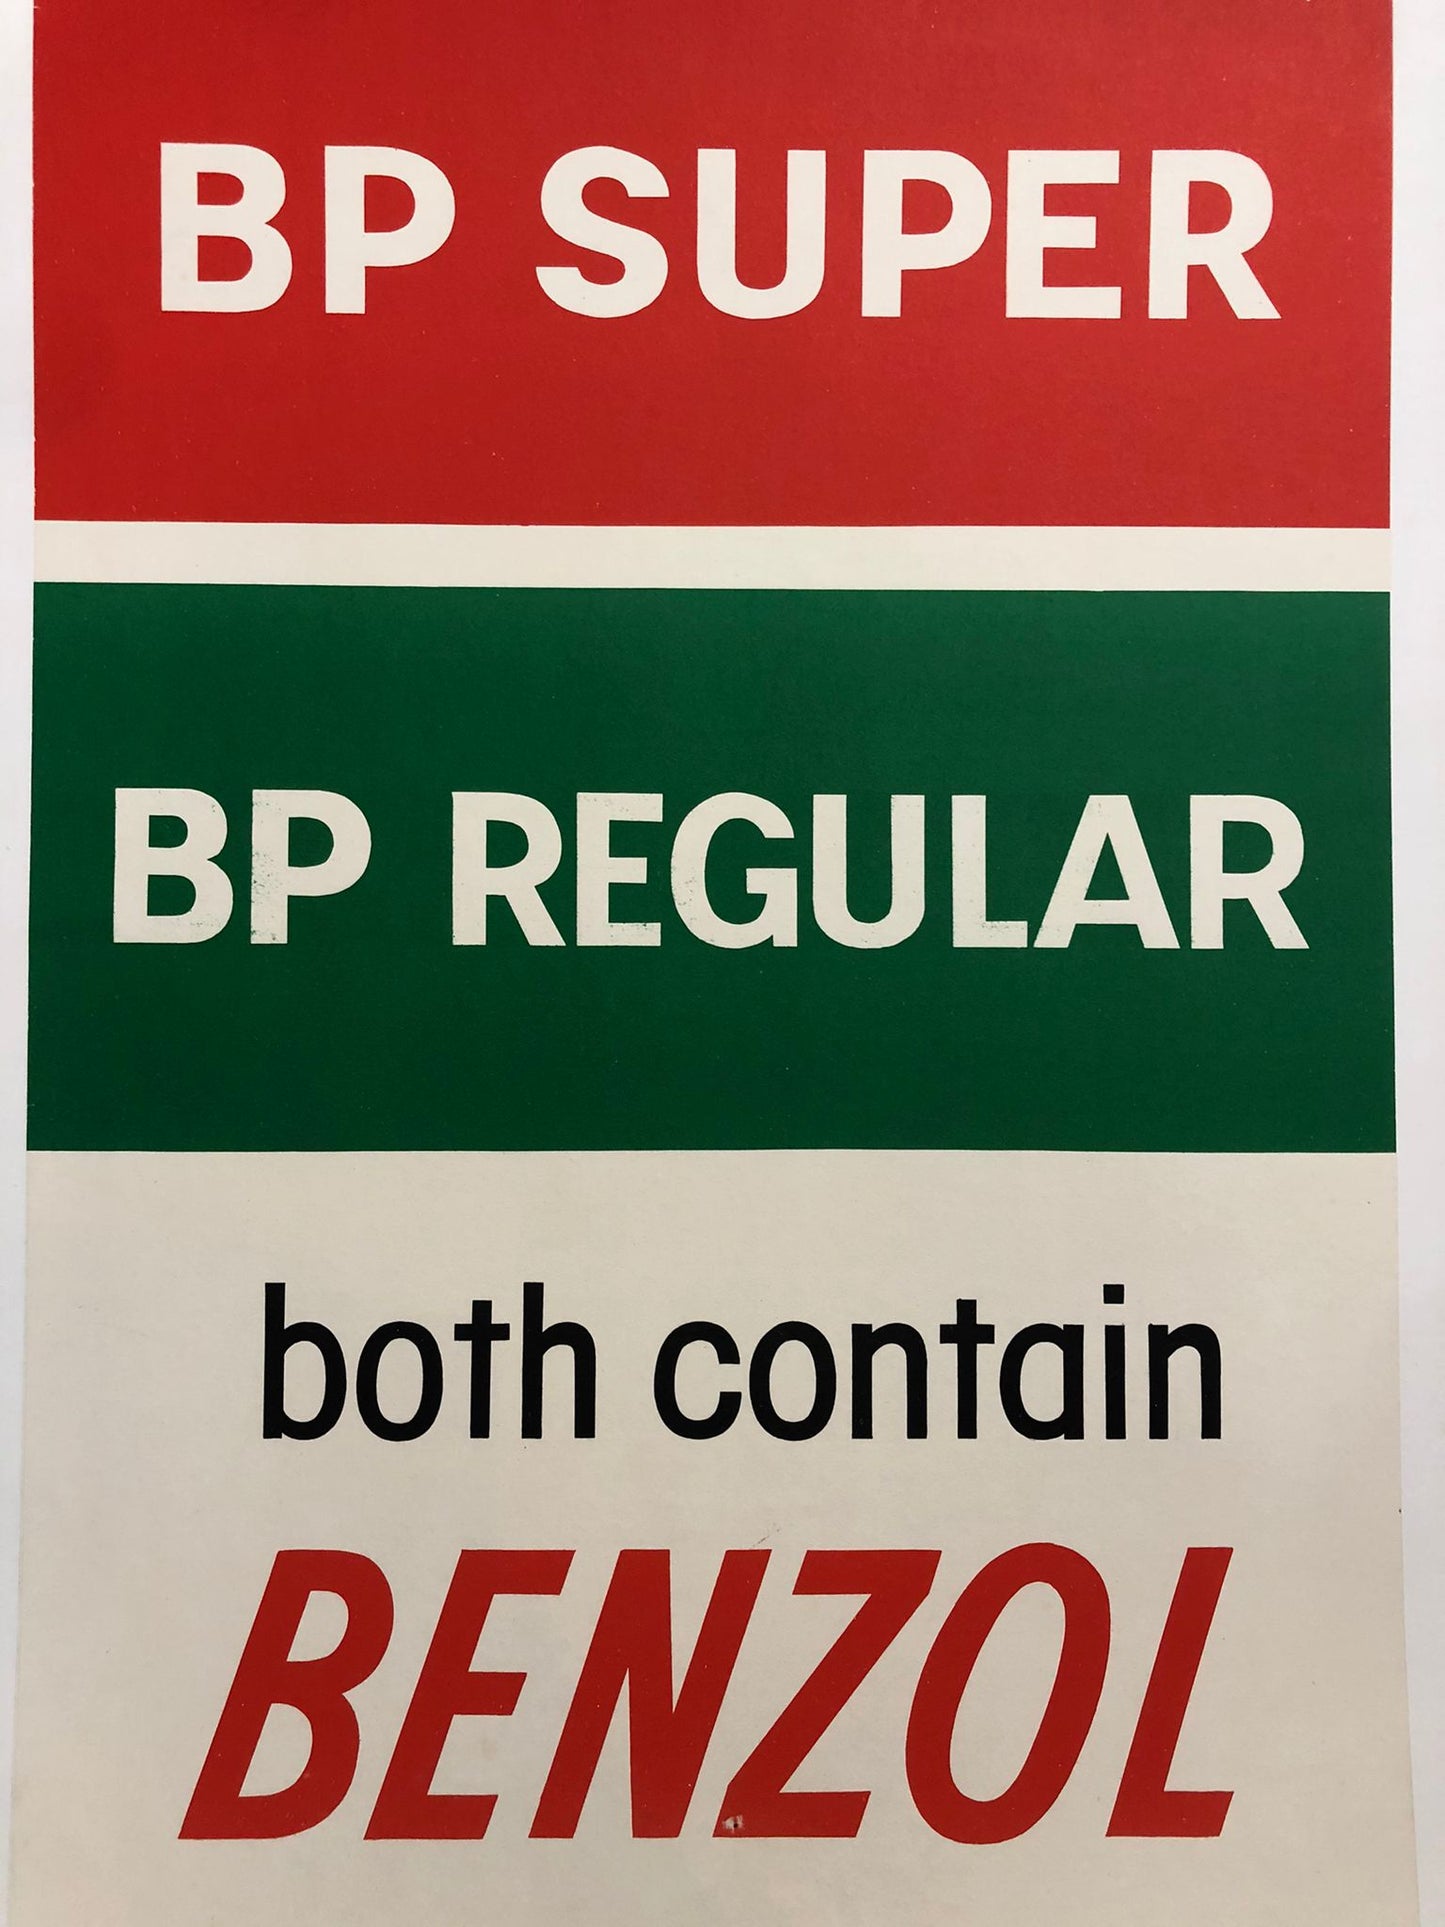 Benzol Advertisement